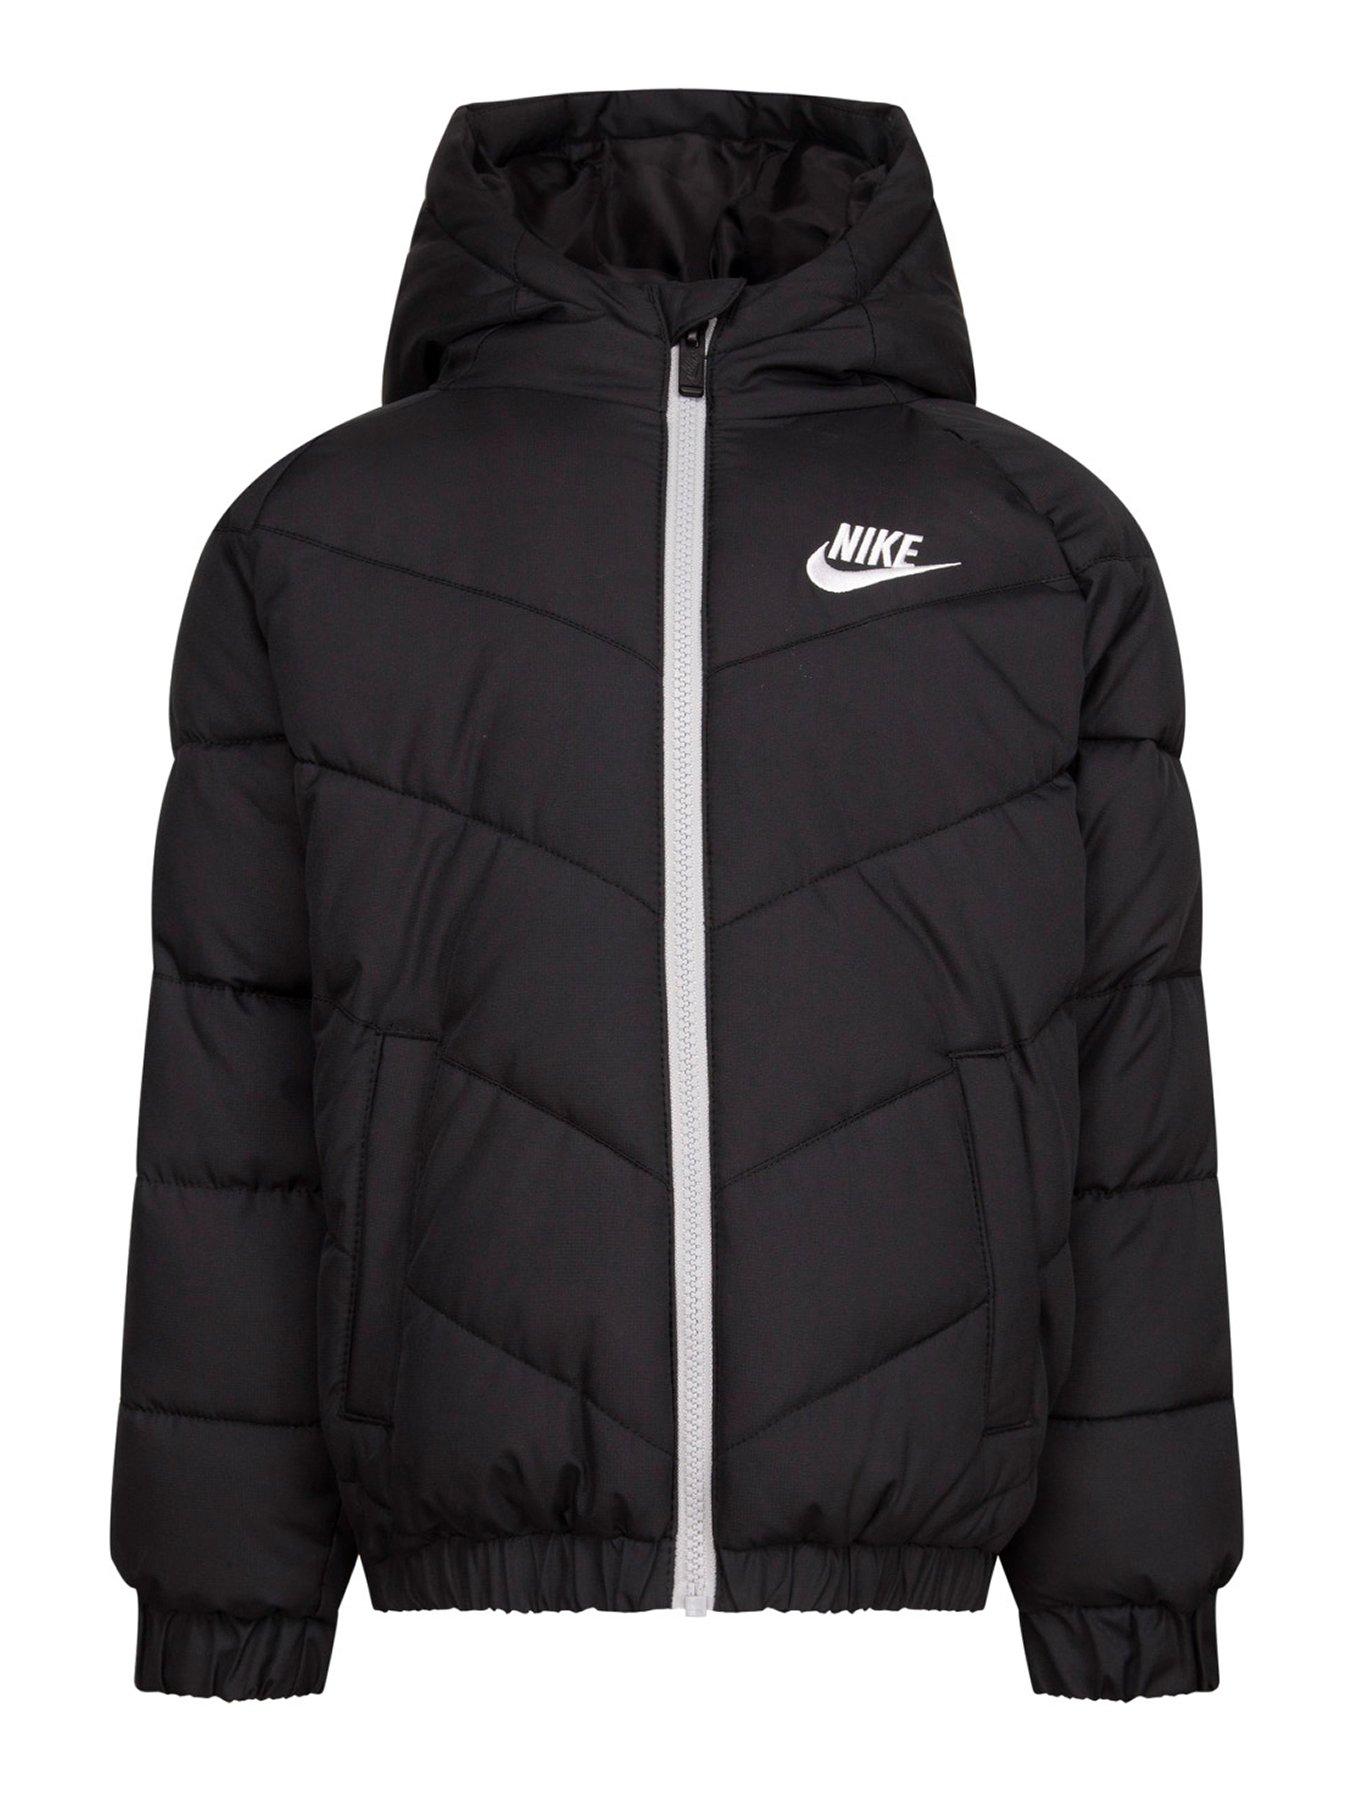 cerca seguridad defecto Boy's Nike Coats & Jackets | Windbreakers | Very.co.uk